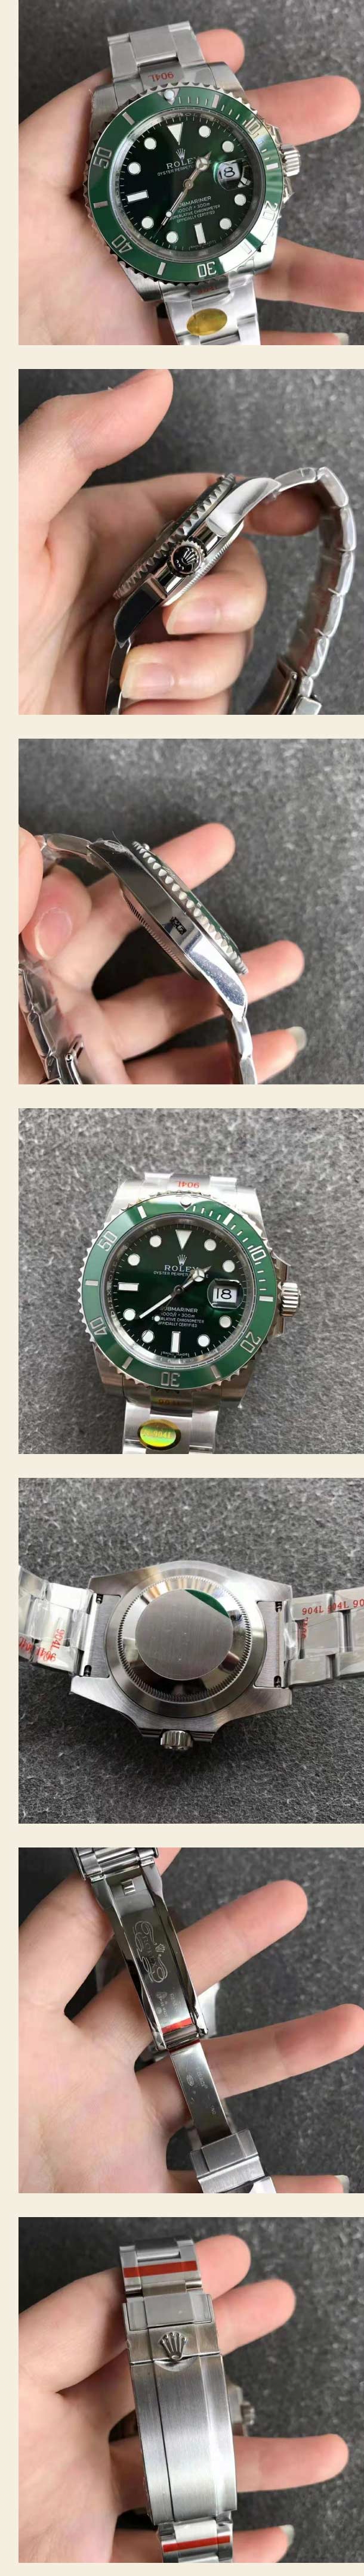 Replica watch Rolex  Submariner 116610Lv